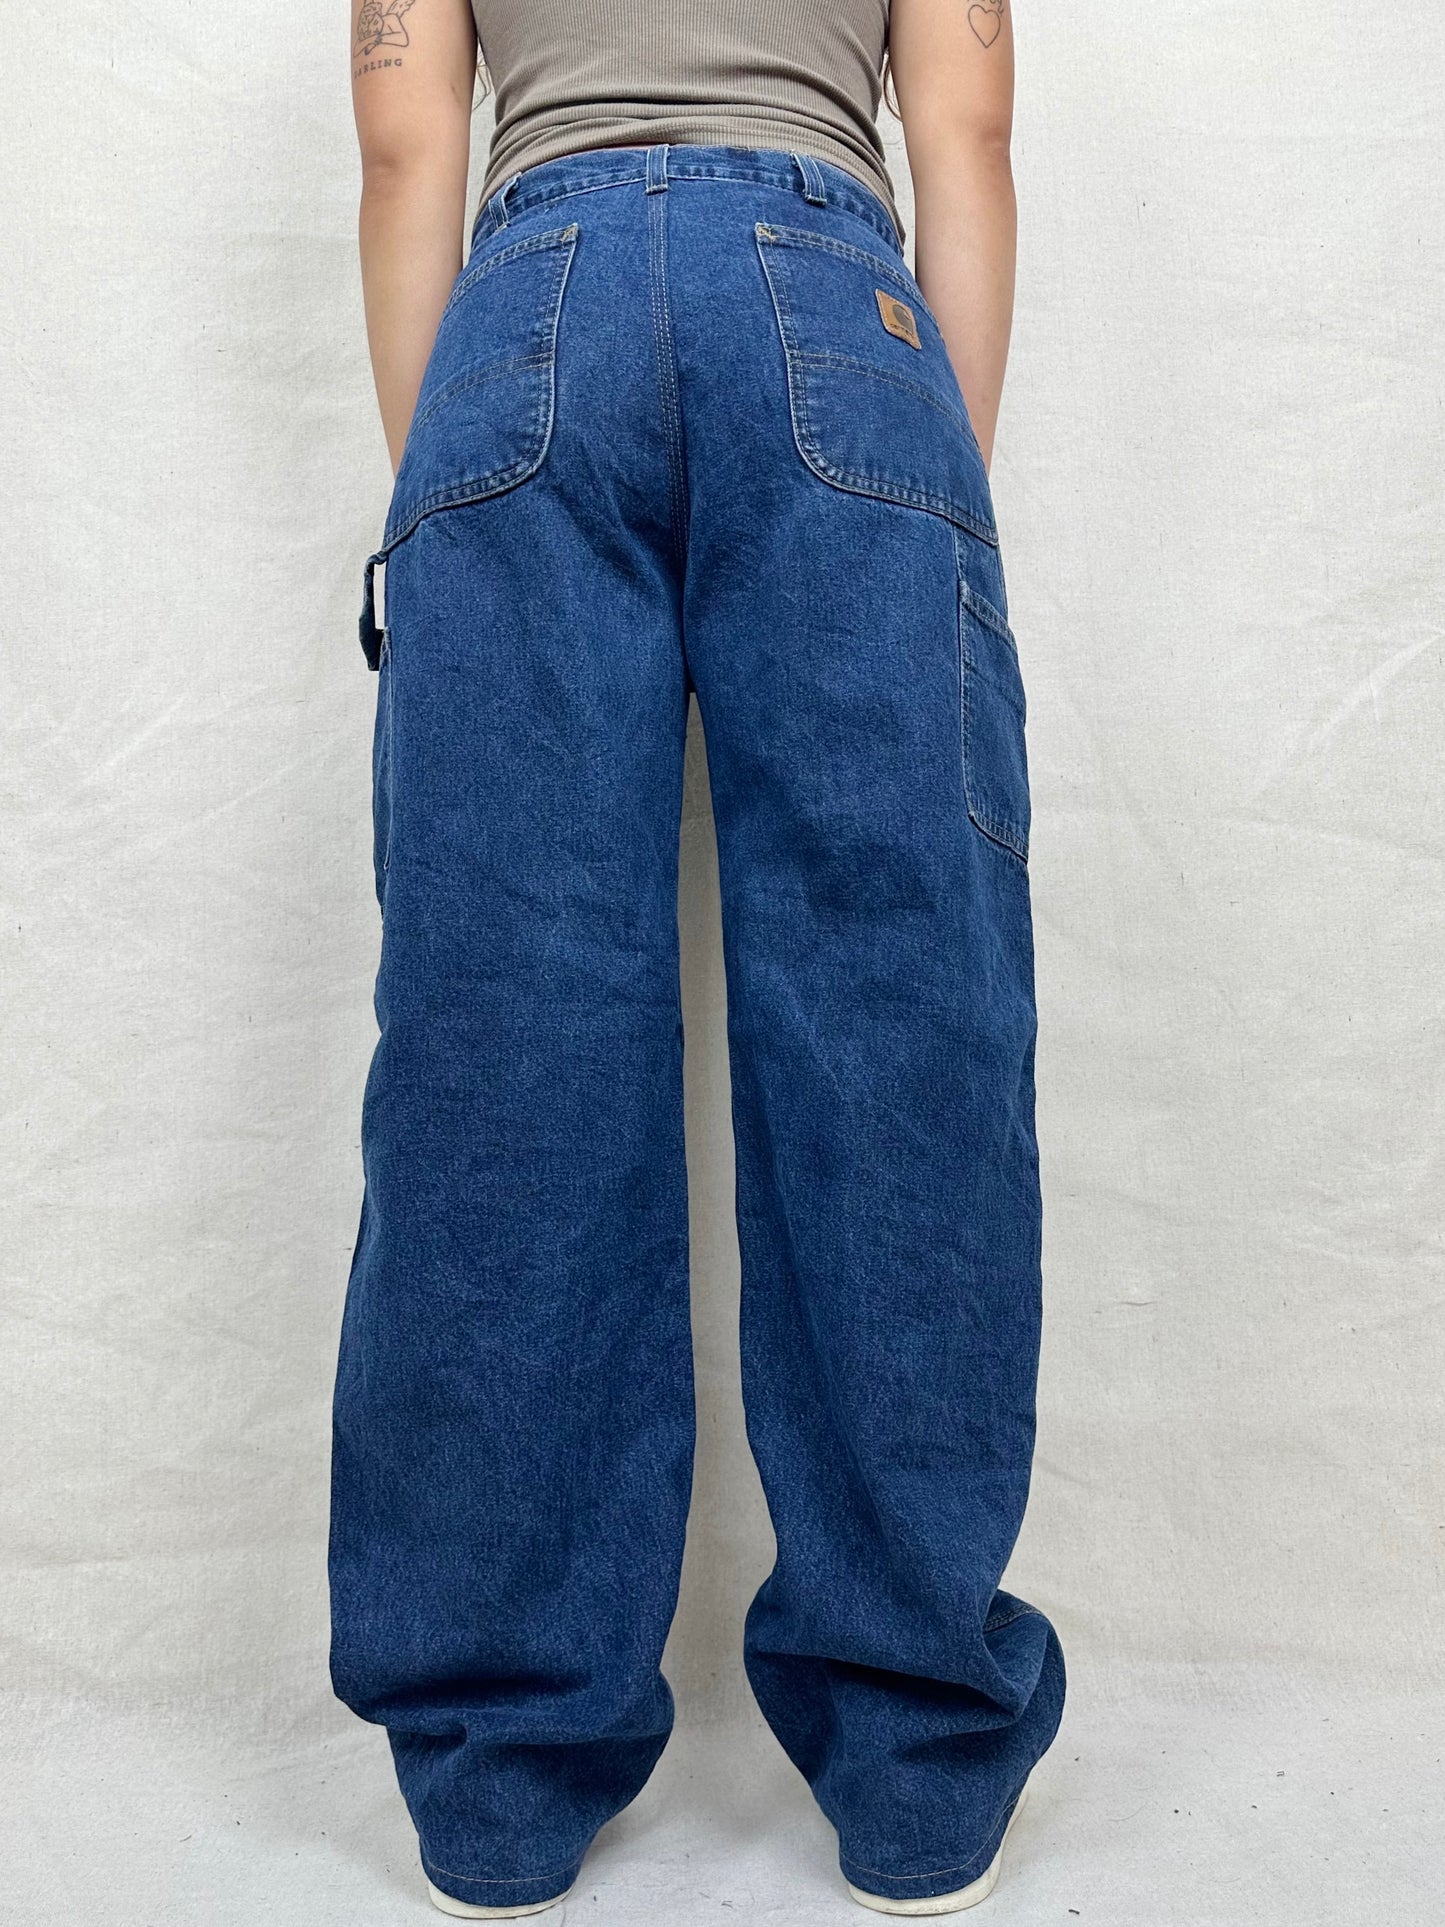 90's Carhartt Heavy Duty Vintage Carpenter Jeans Size 30x31